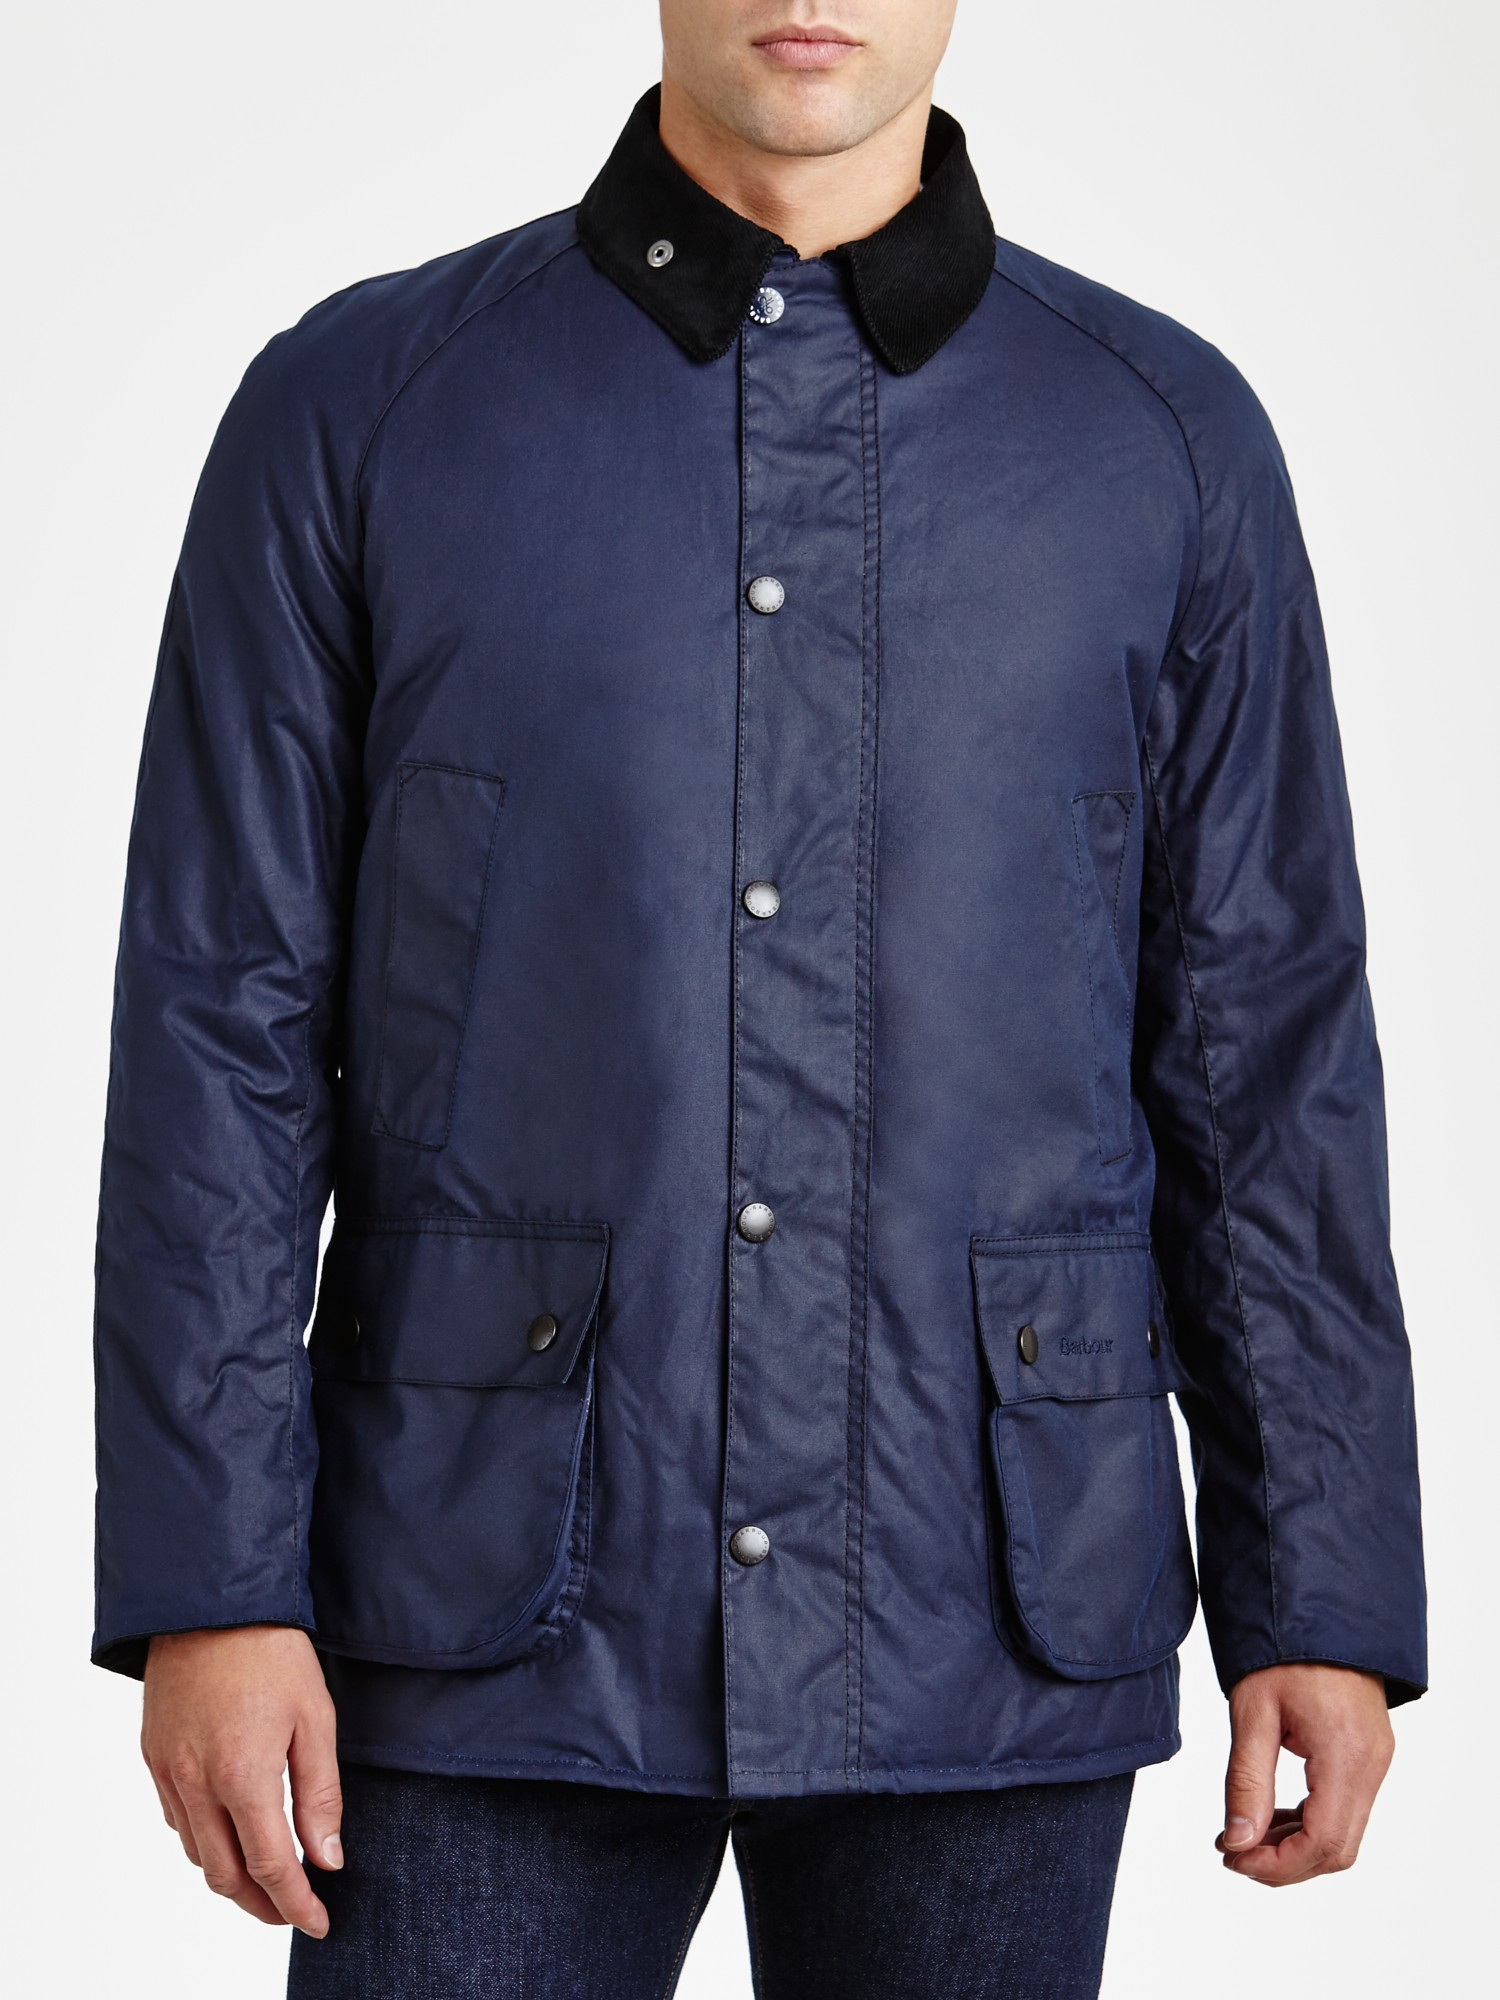 barbour navy blue jacket